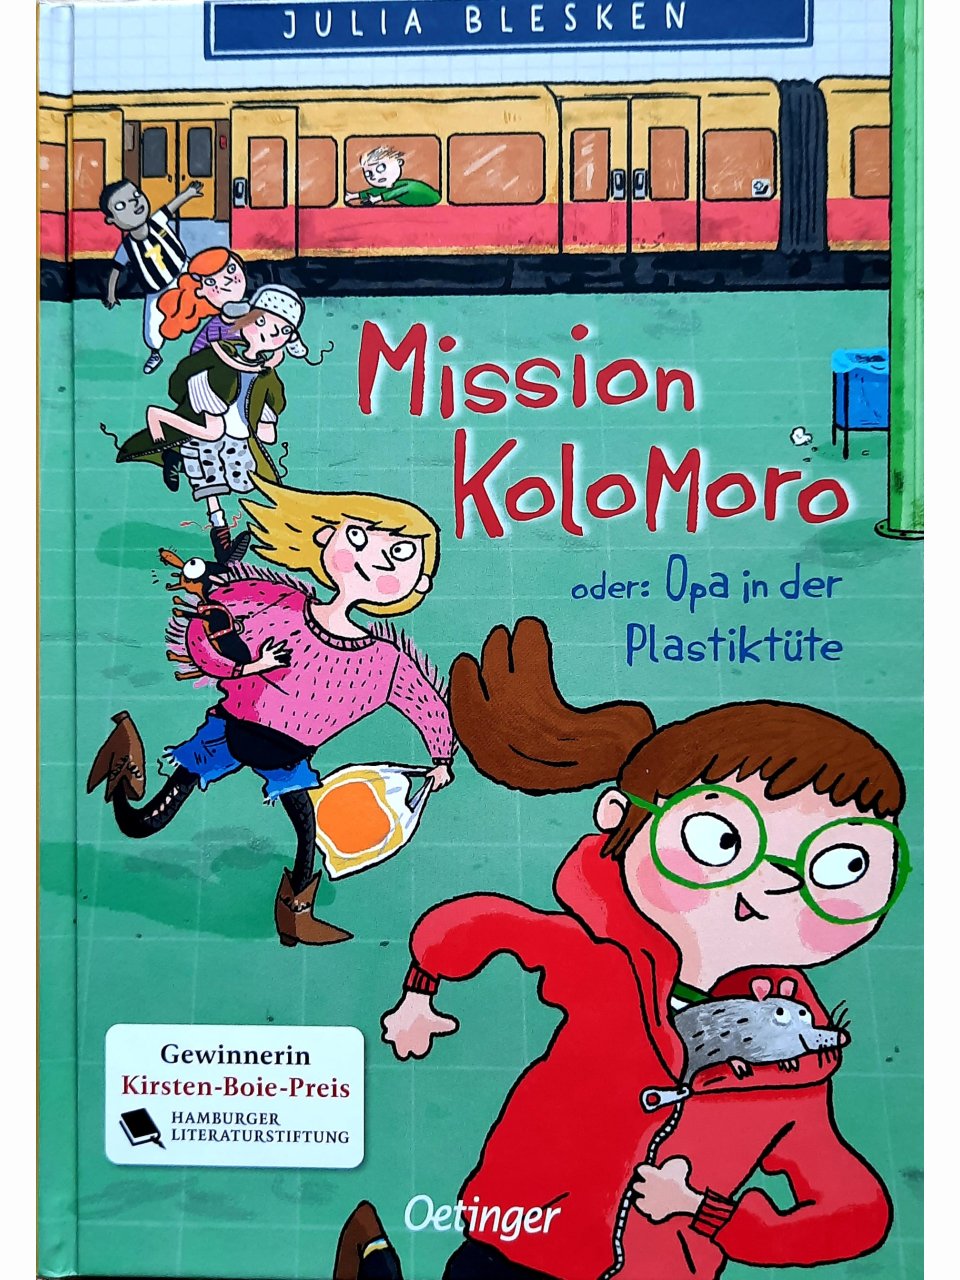 Mission Kolomoro oder: Opa in der Plastiktüte